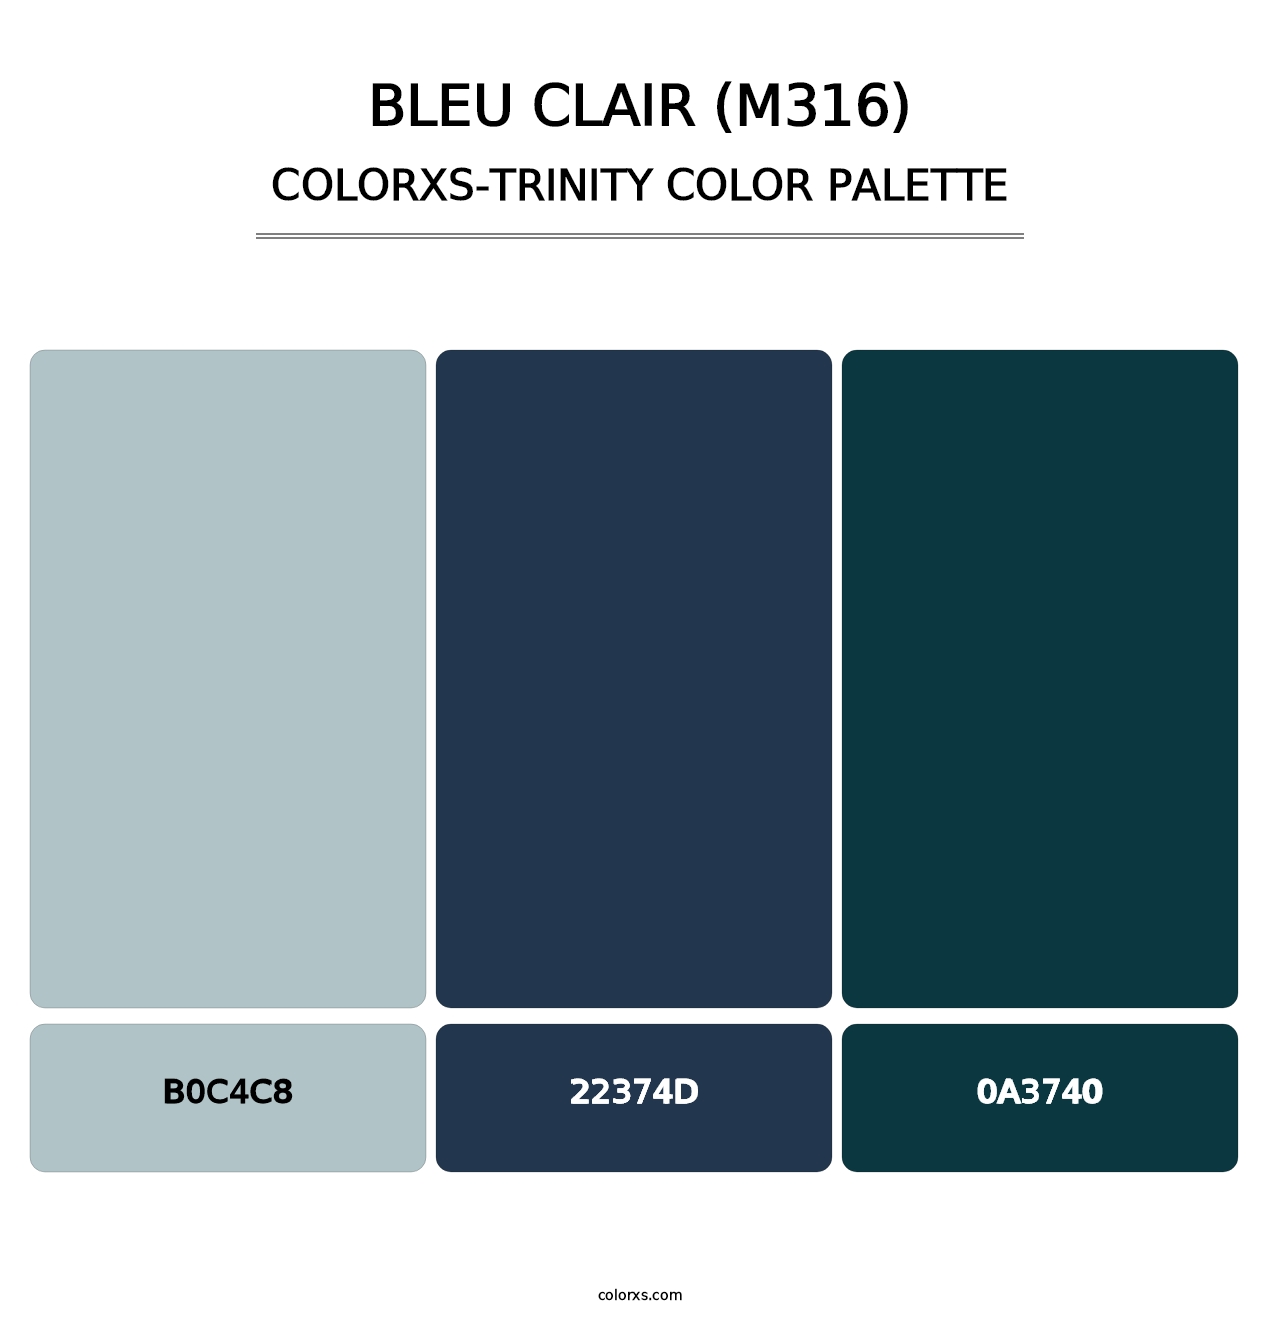 Bleu Clair (M316) - Colorxs Trinity Palette